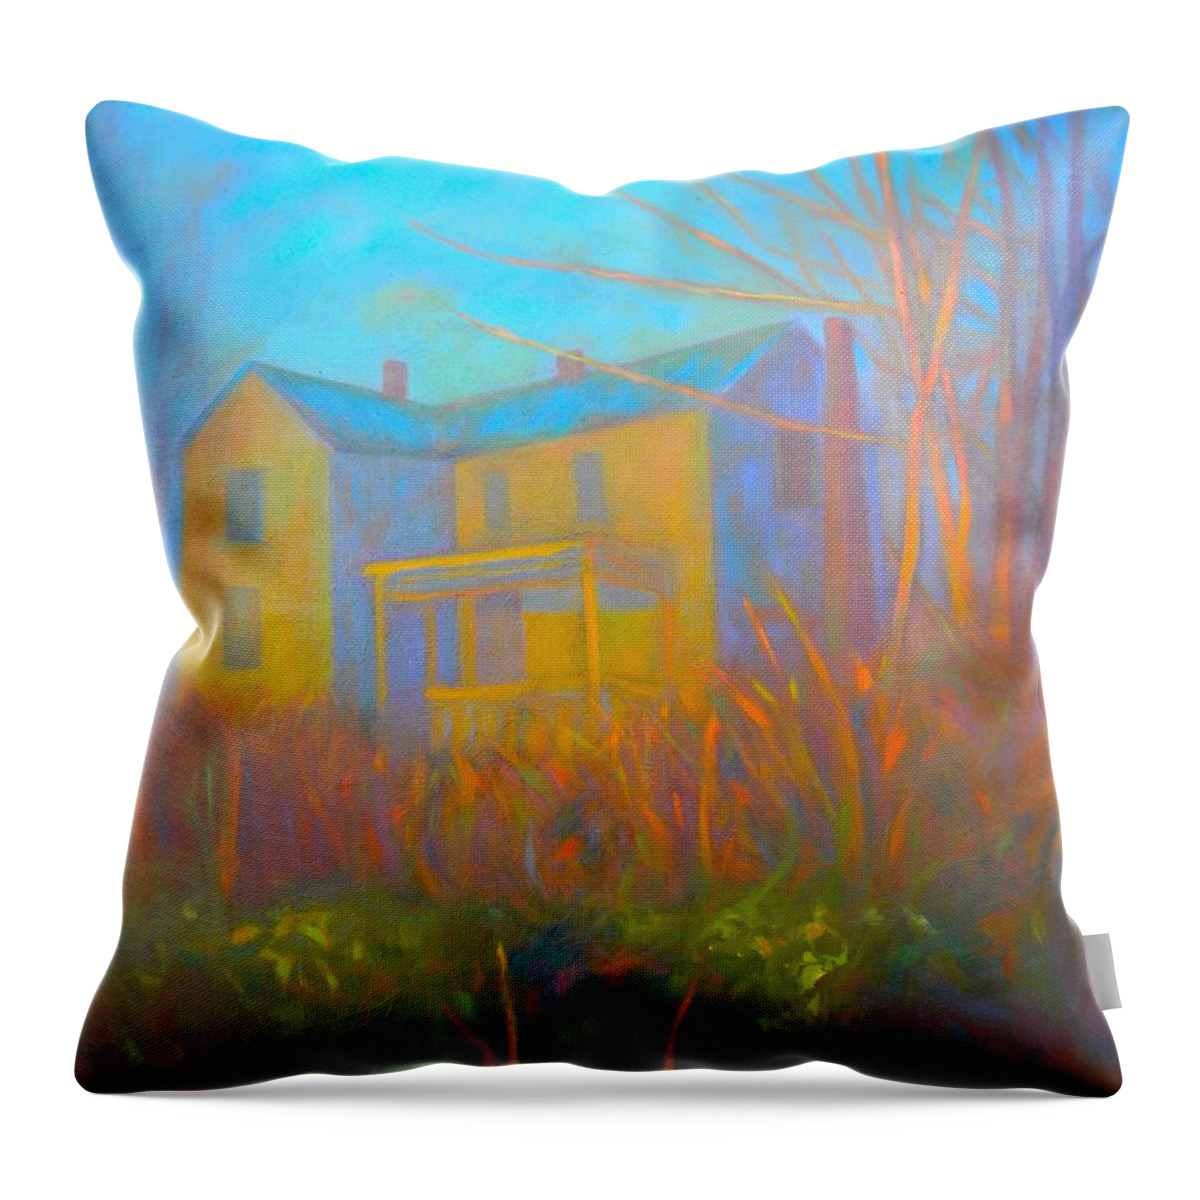 Blacksburg Paintings Throw Pillow featuring the painting House in Blacksburg by Kendall Kessler